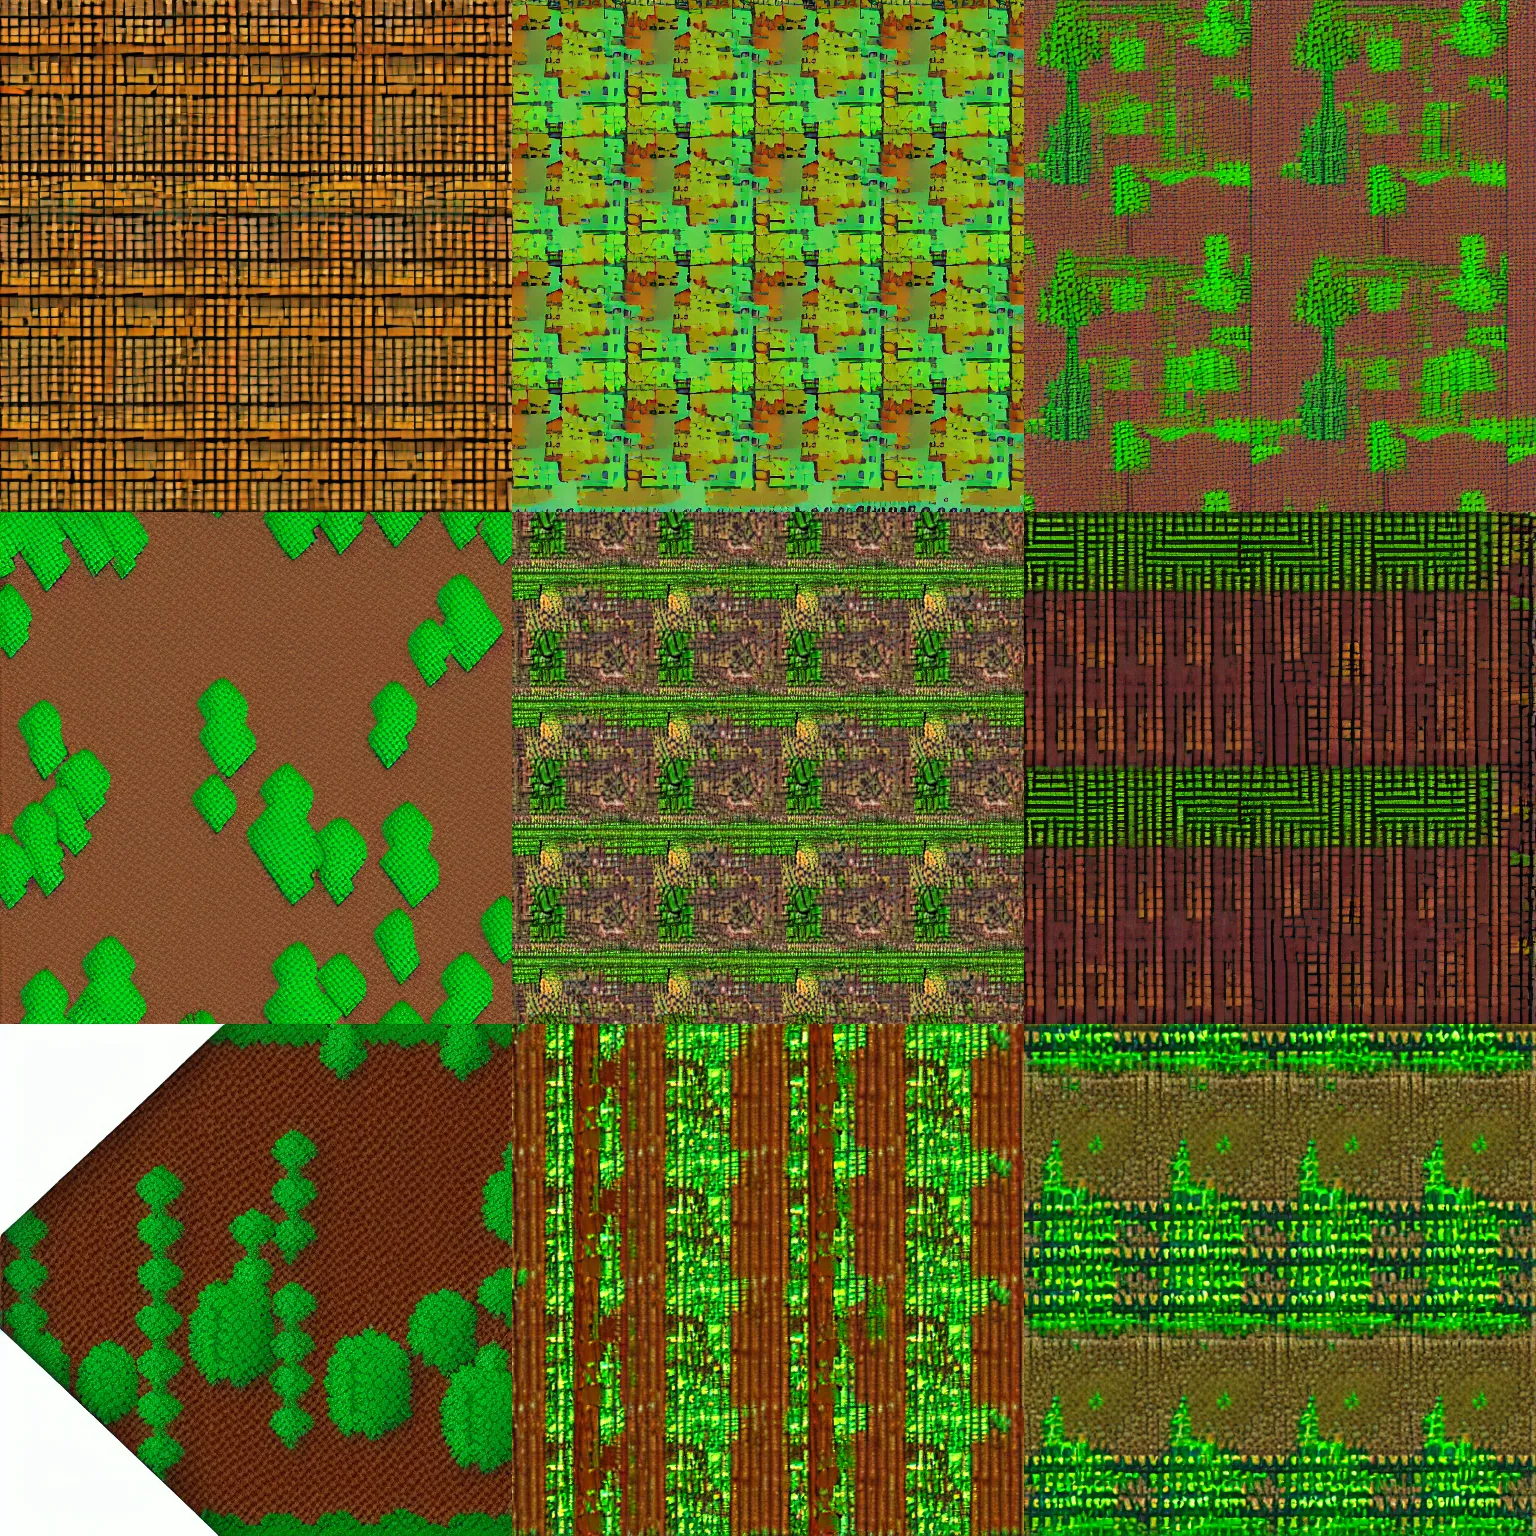 Prompt: pixel art forest ground texture